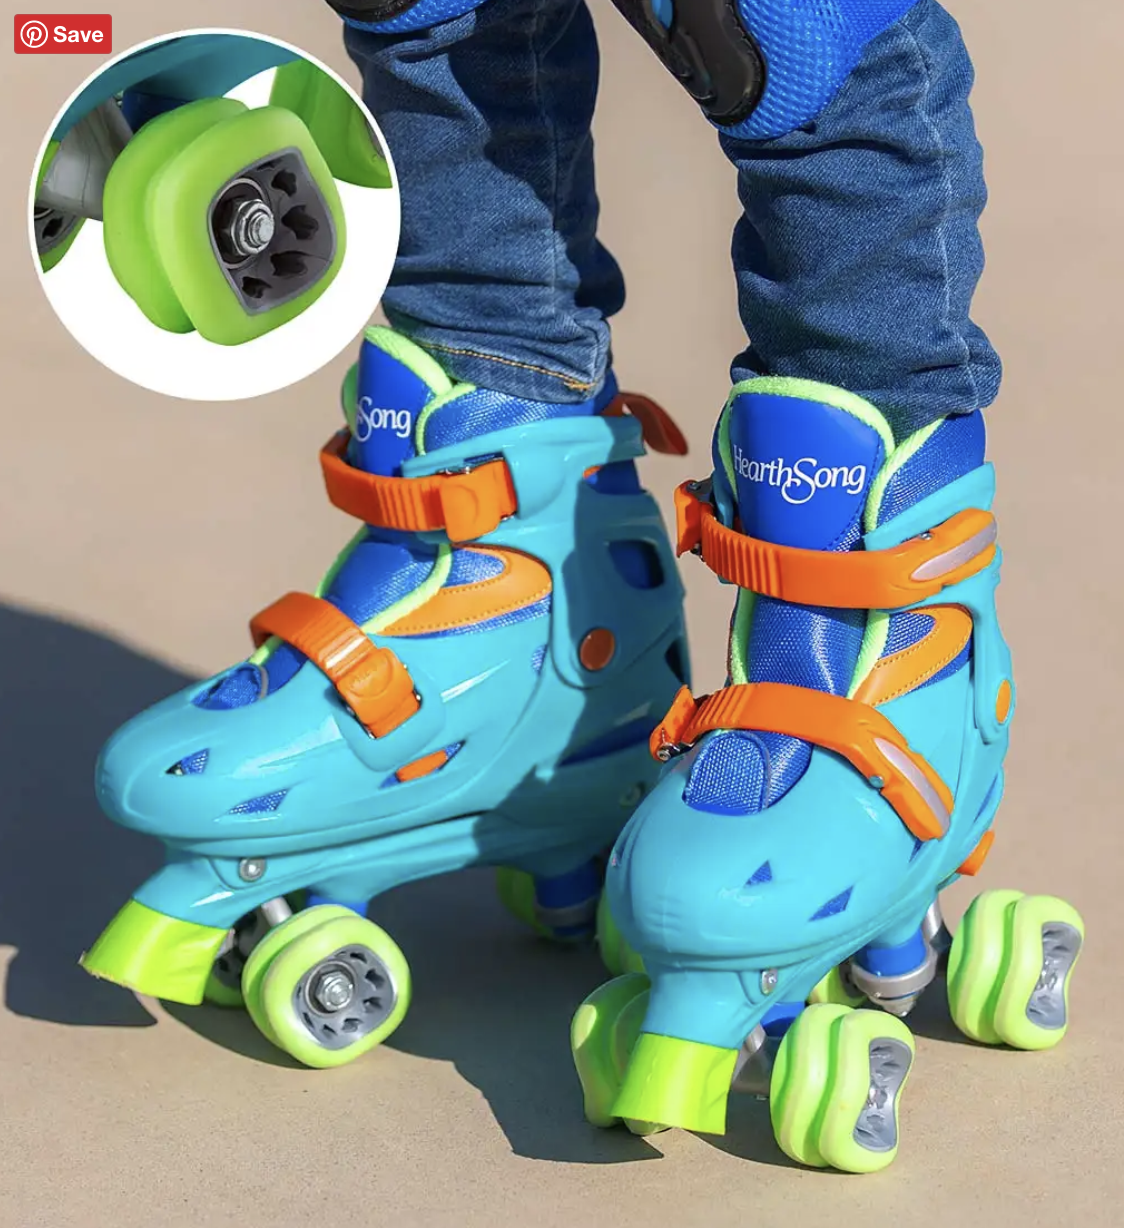 One2Go Adjustable Roller Skates Featuring Shark Wheels Jr.